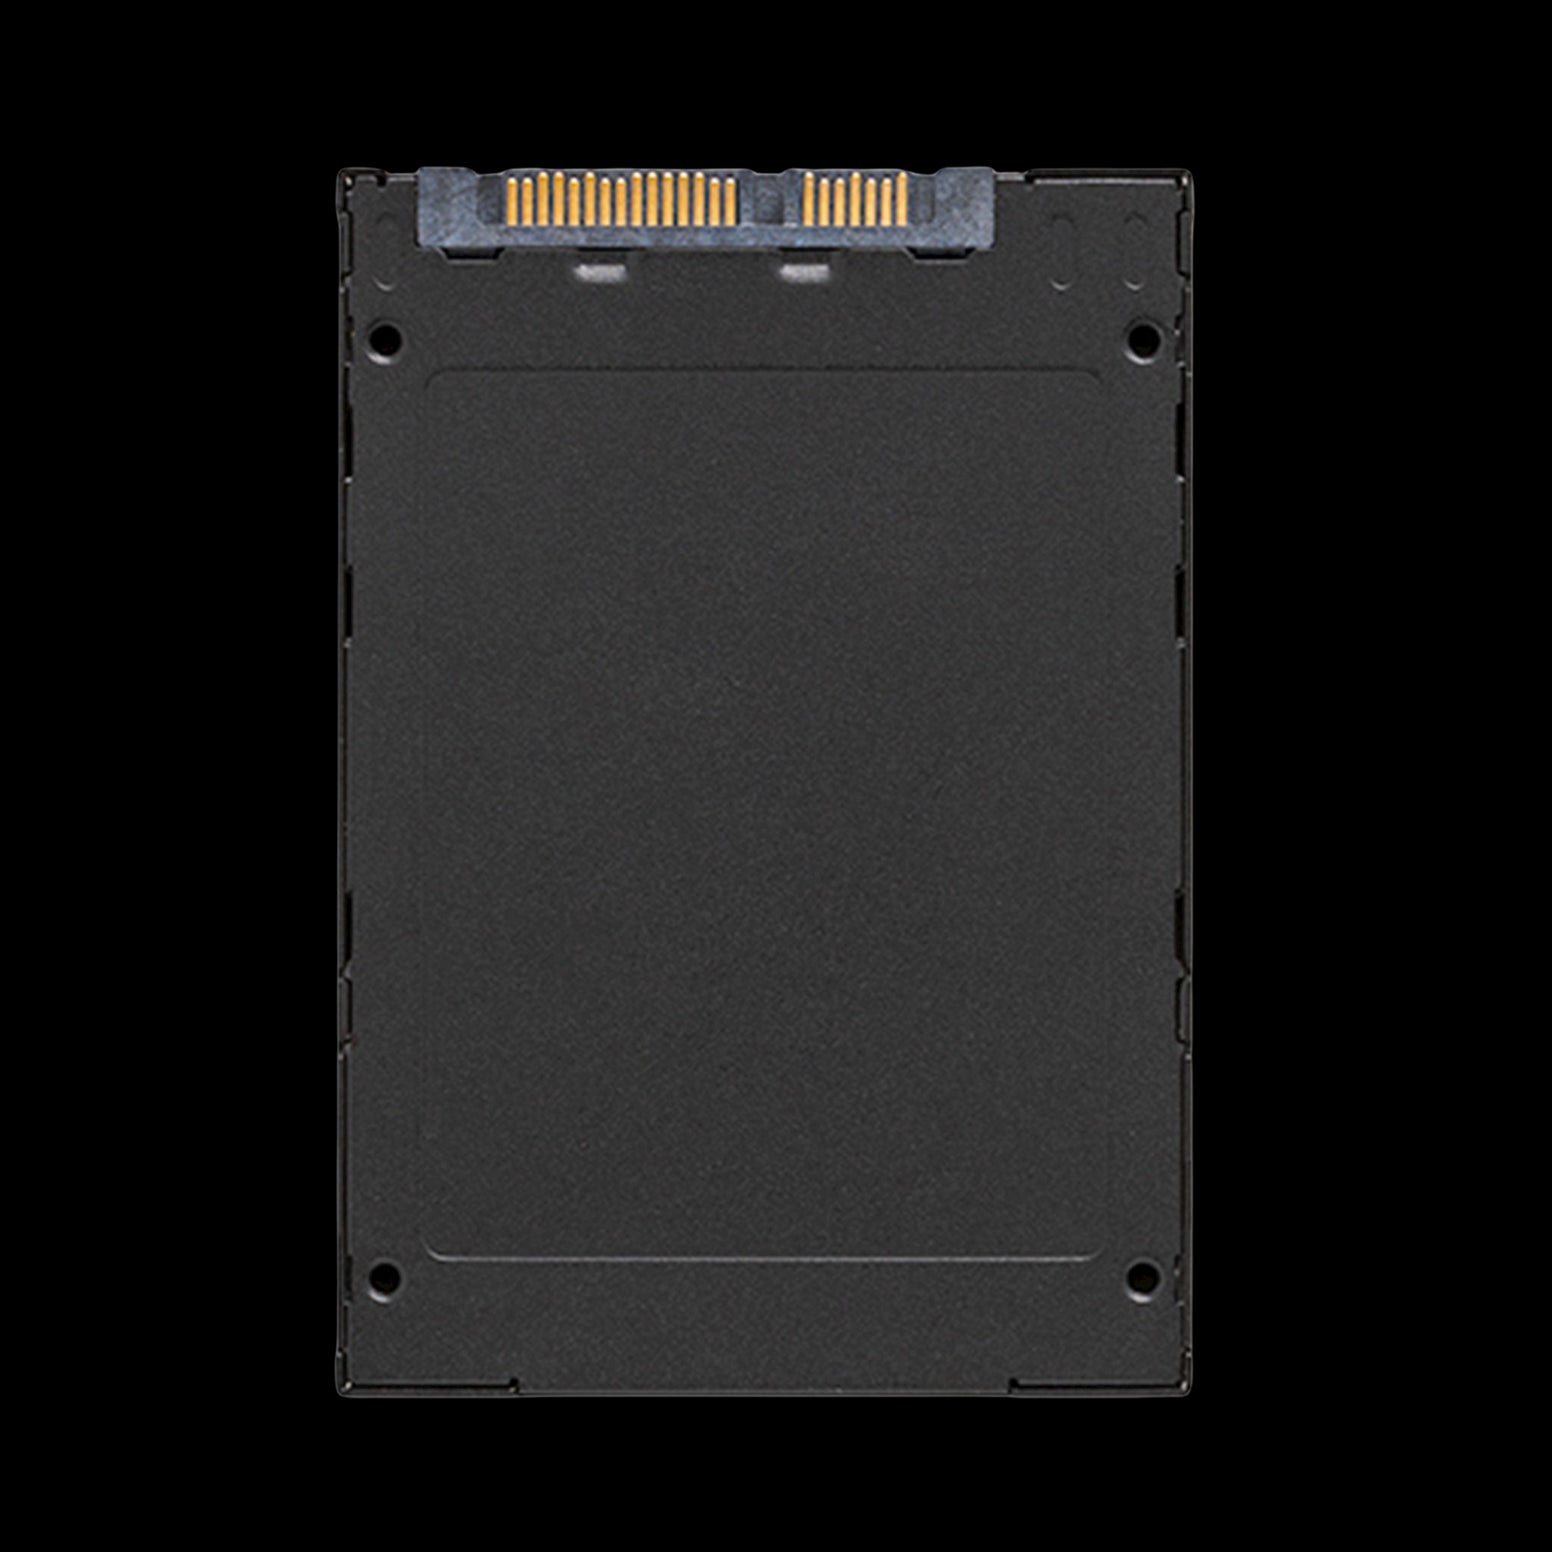 OWC 240GB Mercury Extreme Pro 6G 2.5" SATA SSD - Discontinued